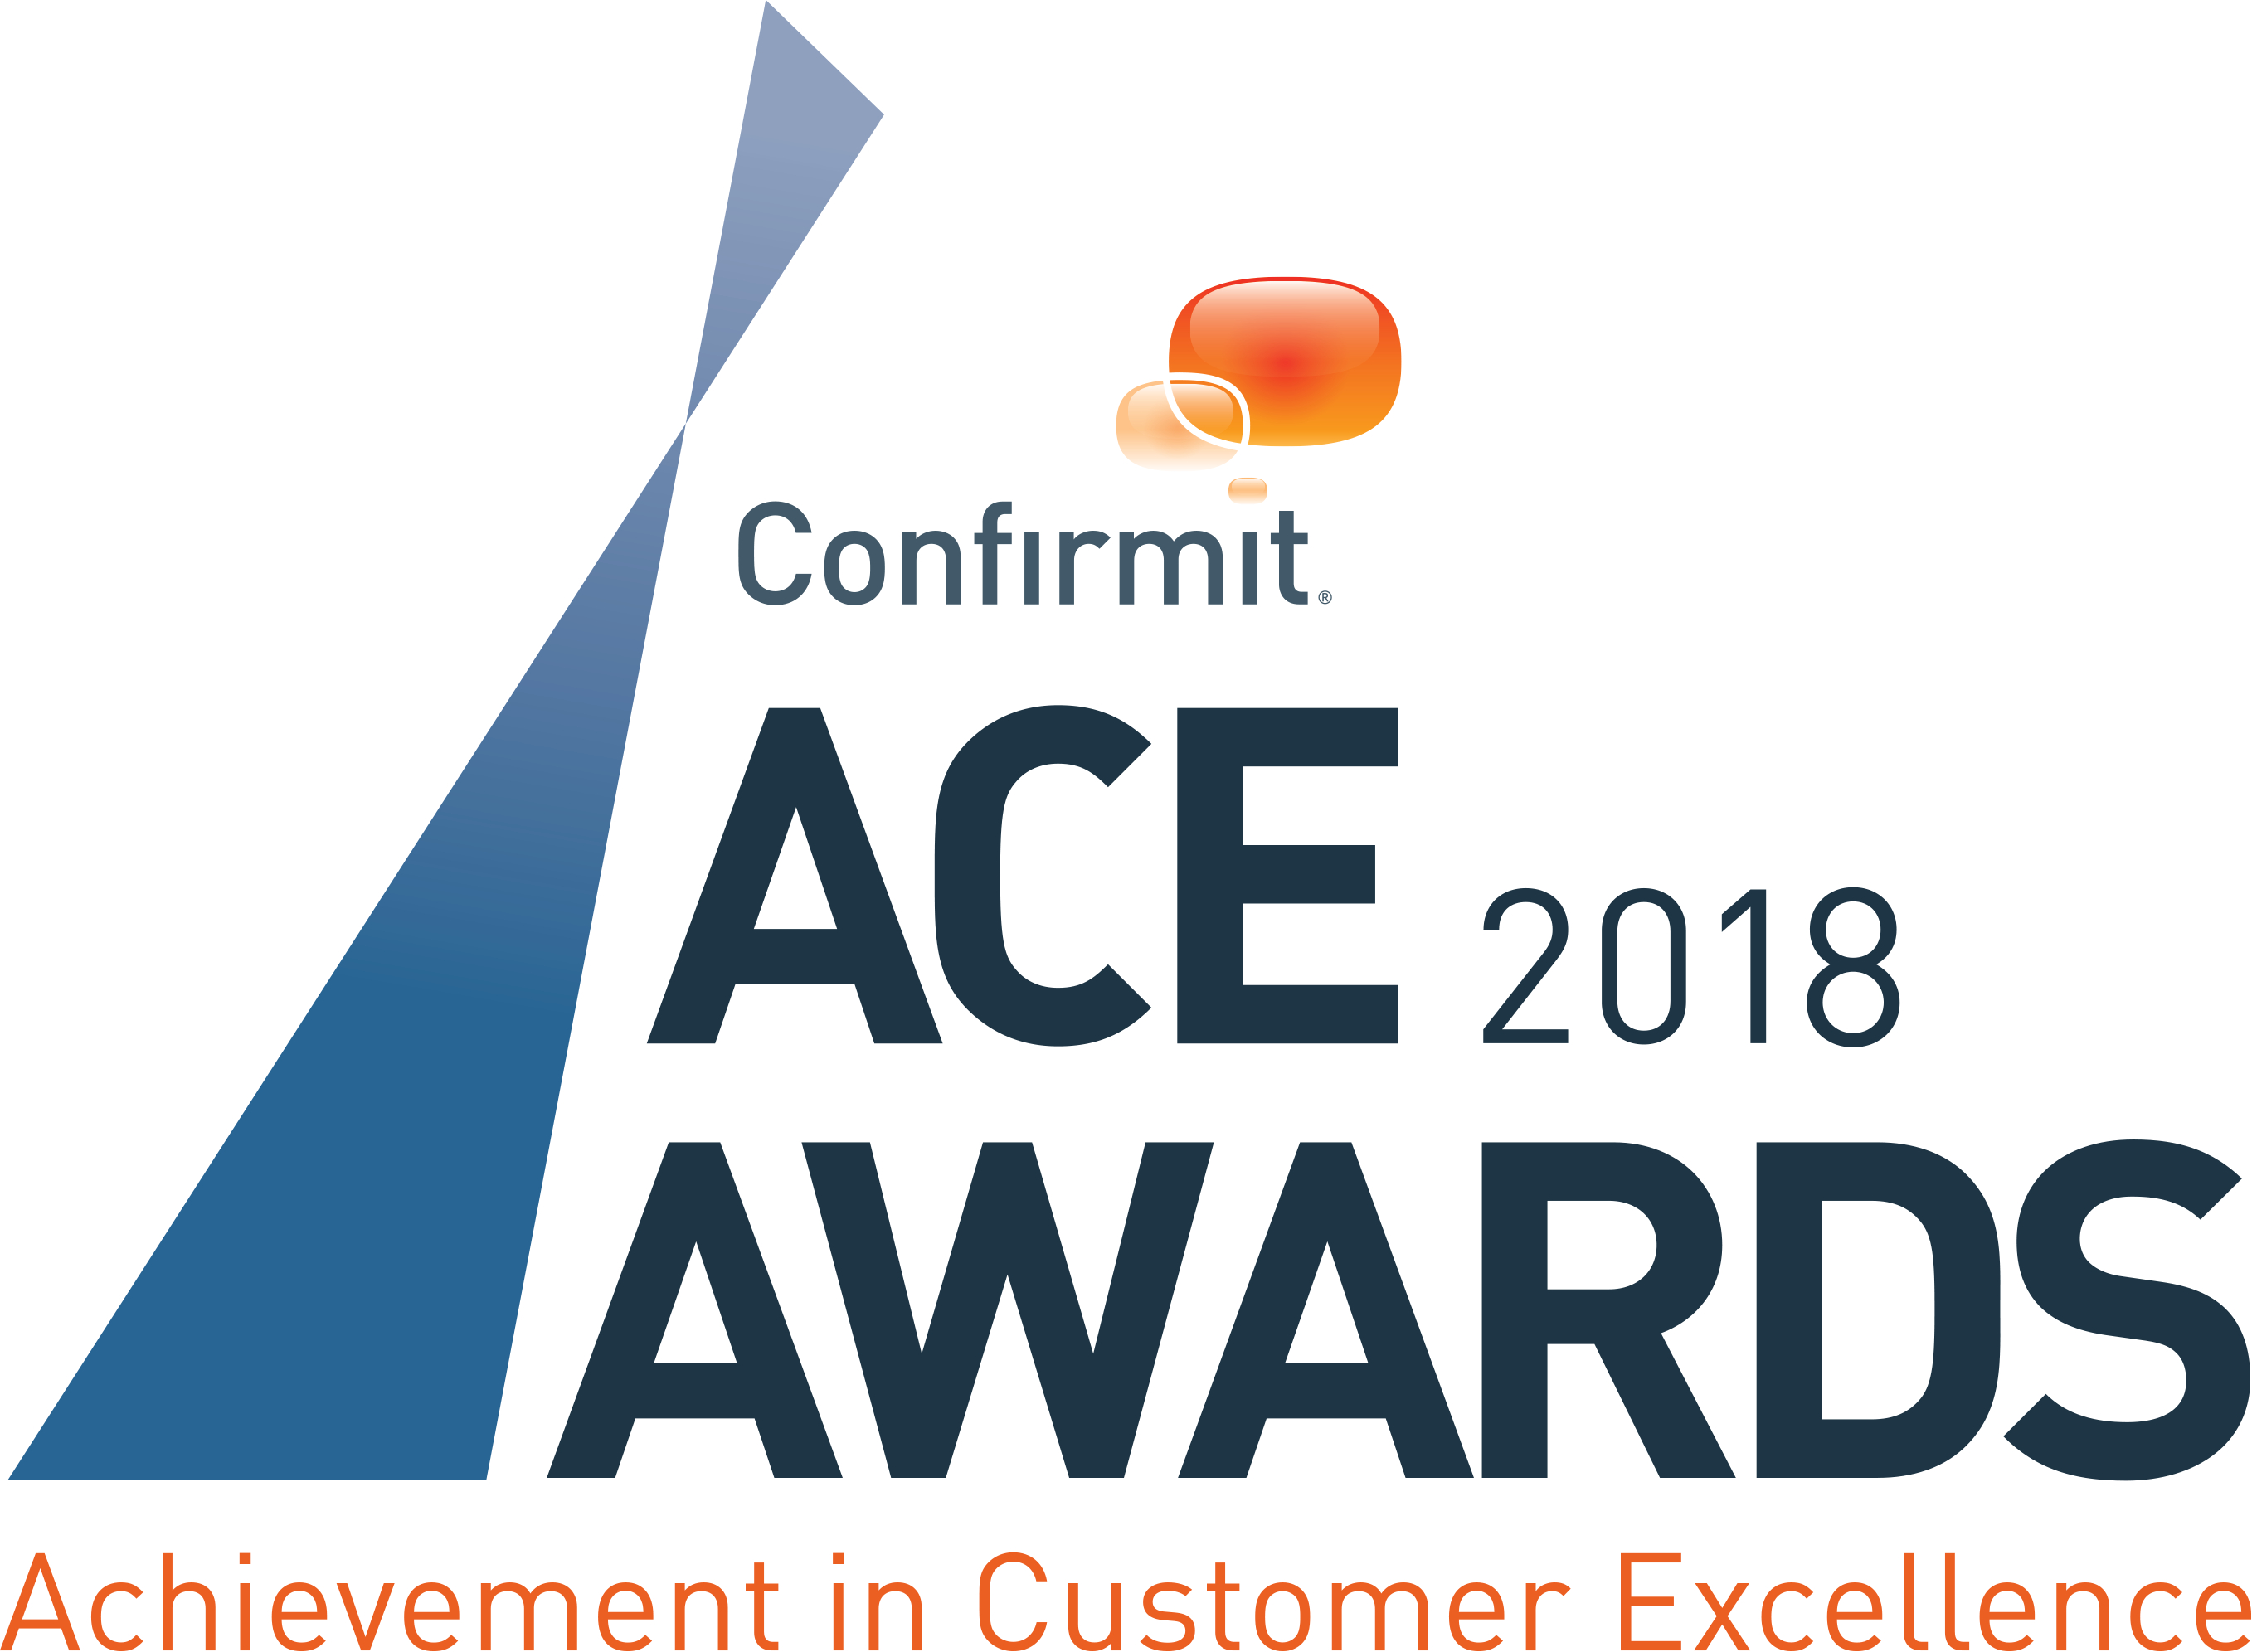 KDI Confirmit ACE Awards 2018 Logo 300